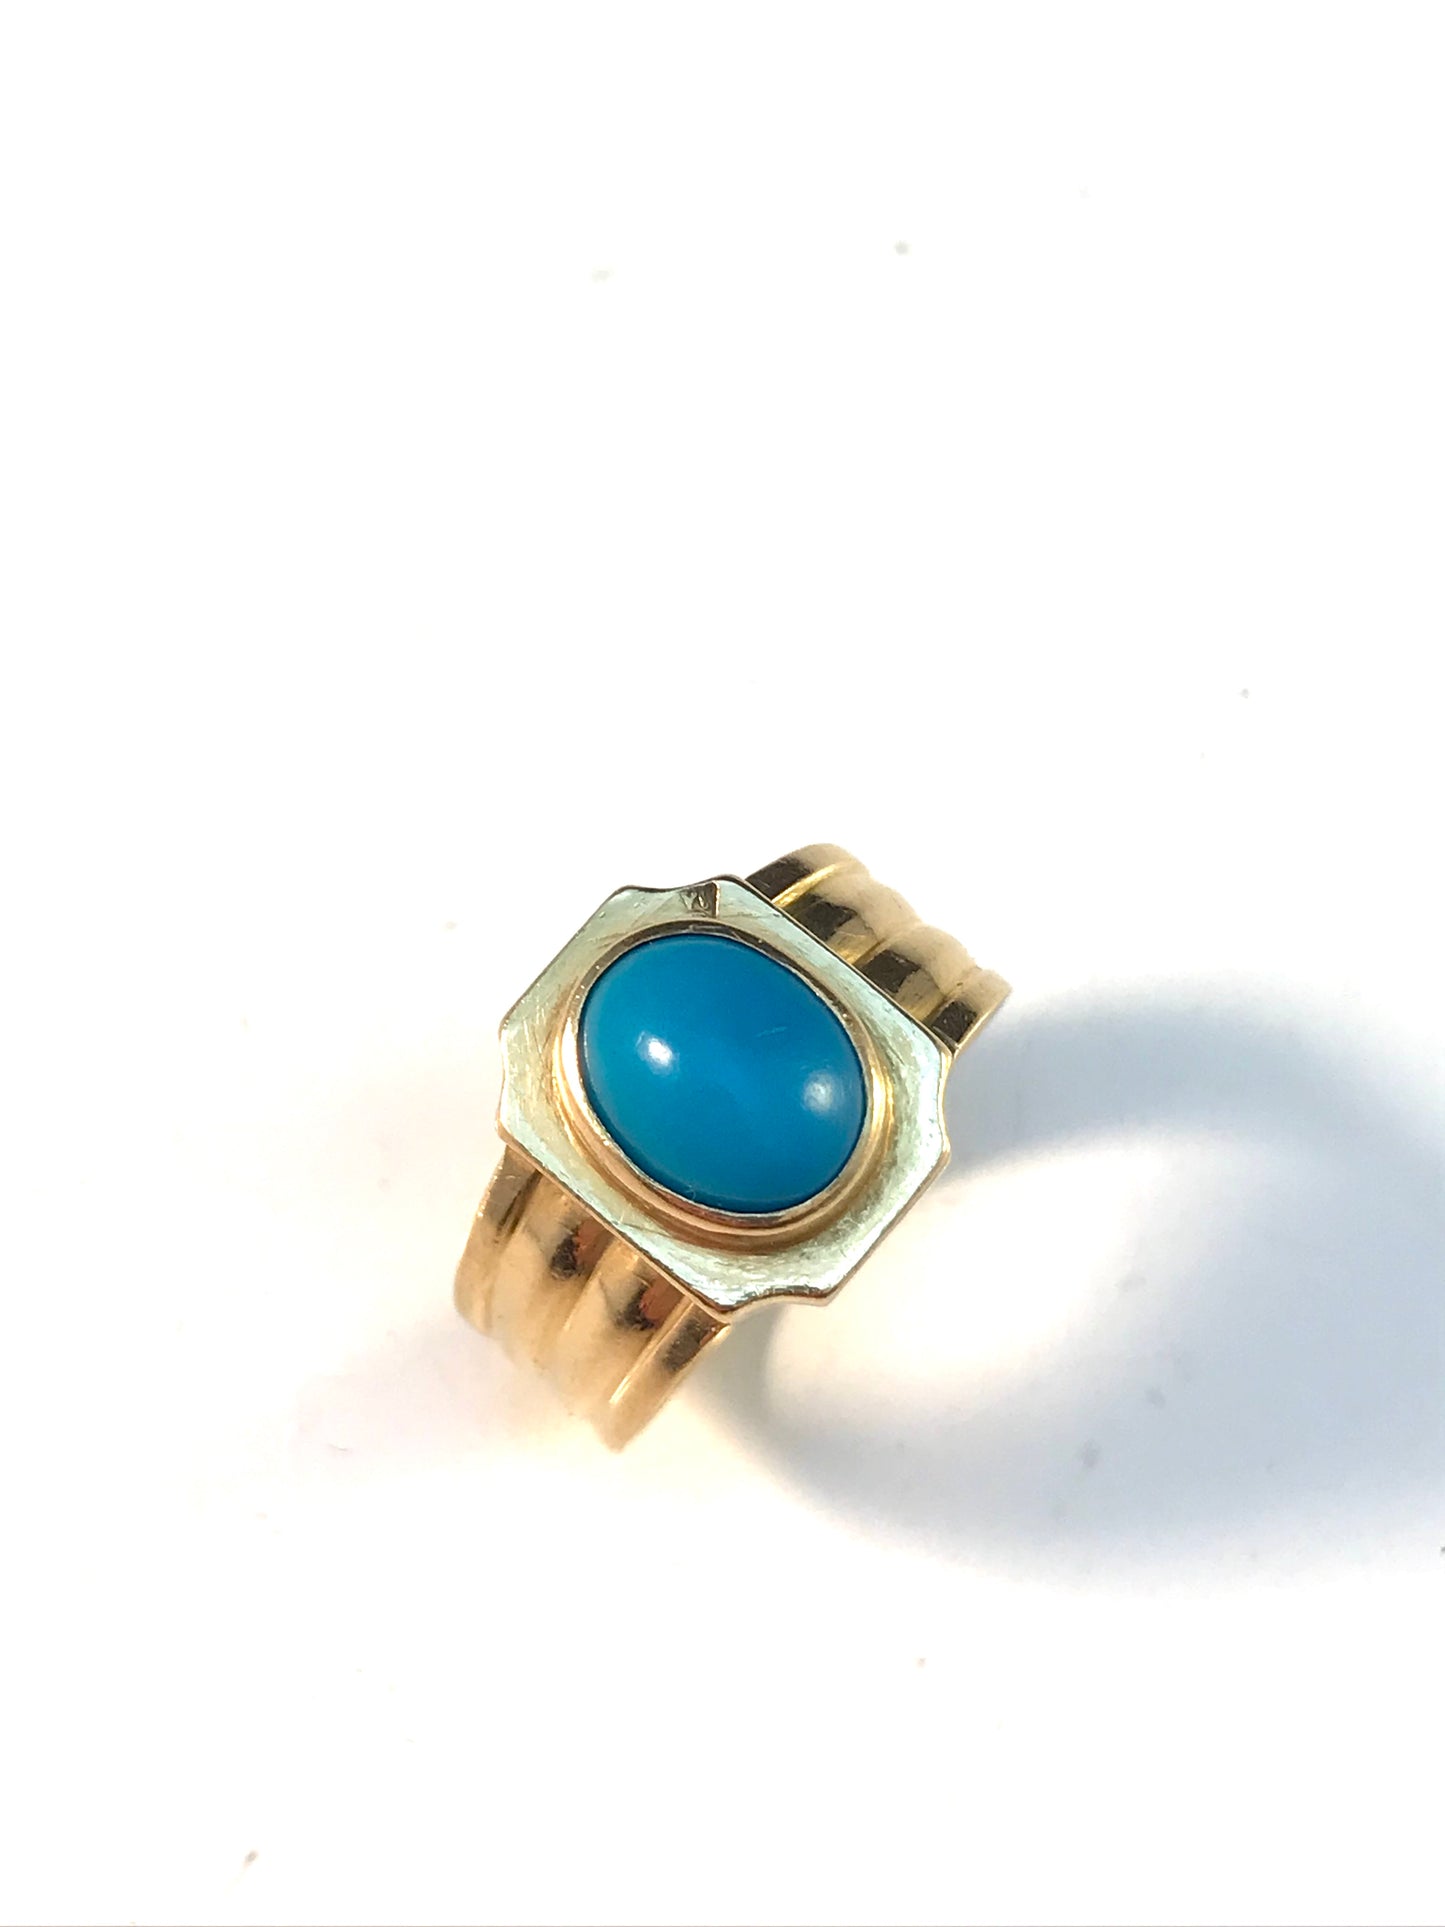 Lebanon Mid Century Modern 1950-60s, 18k Gold Turquoise Ring.